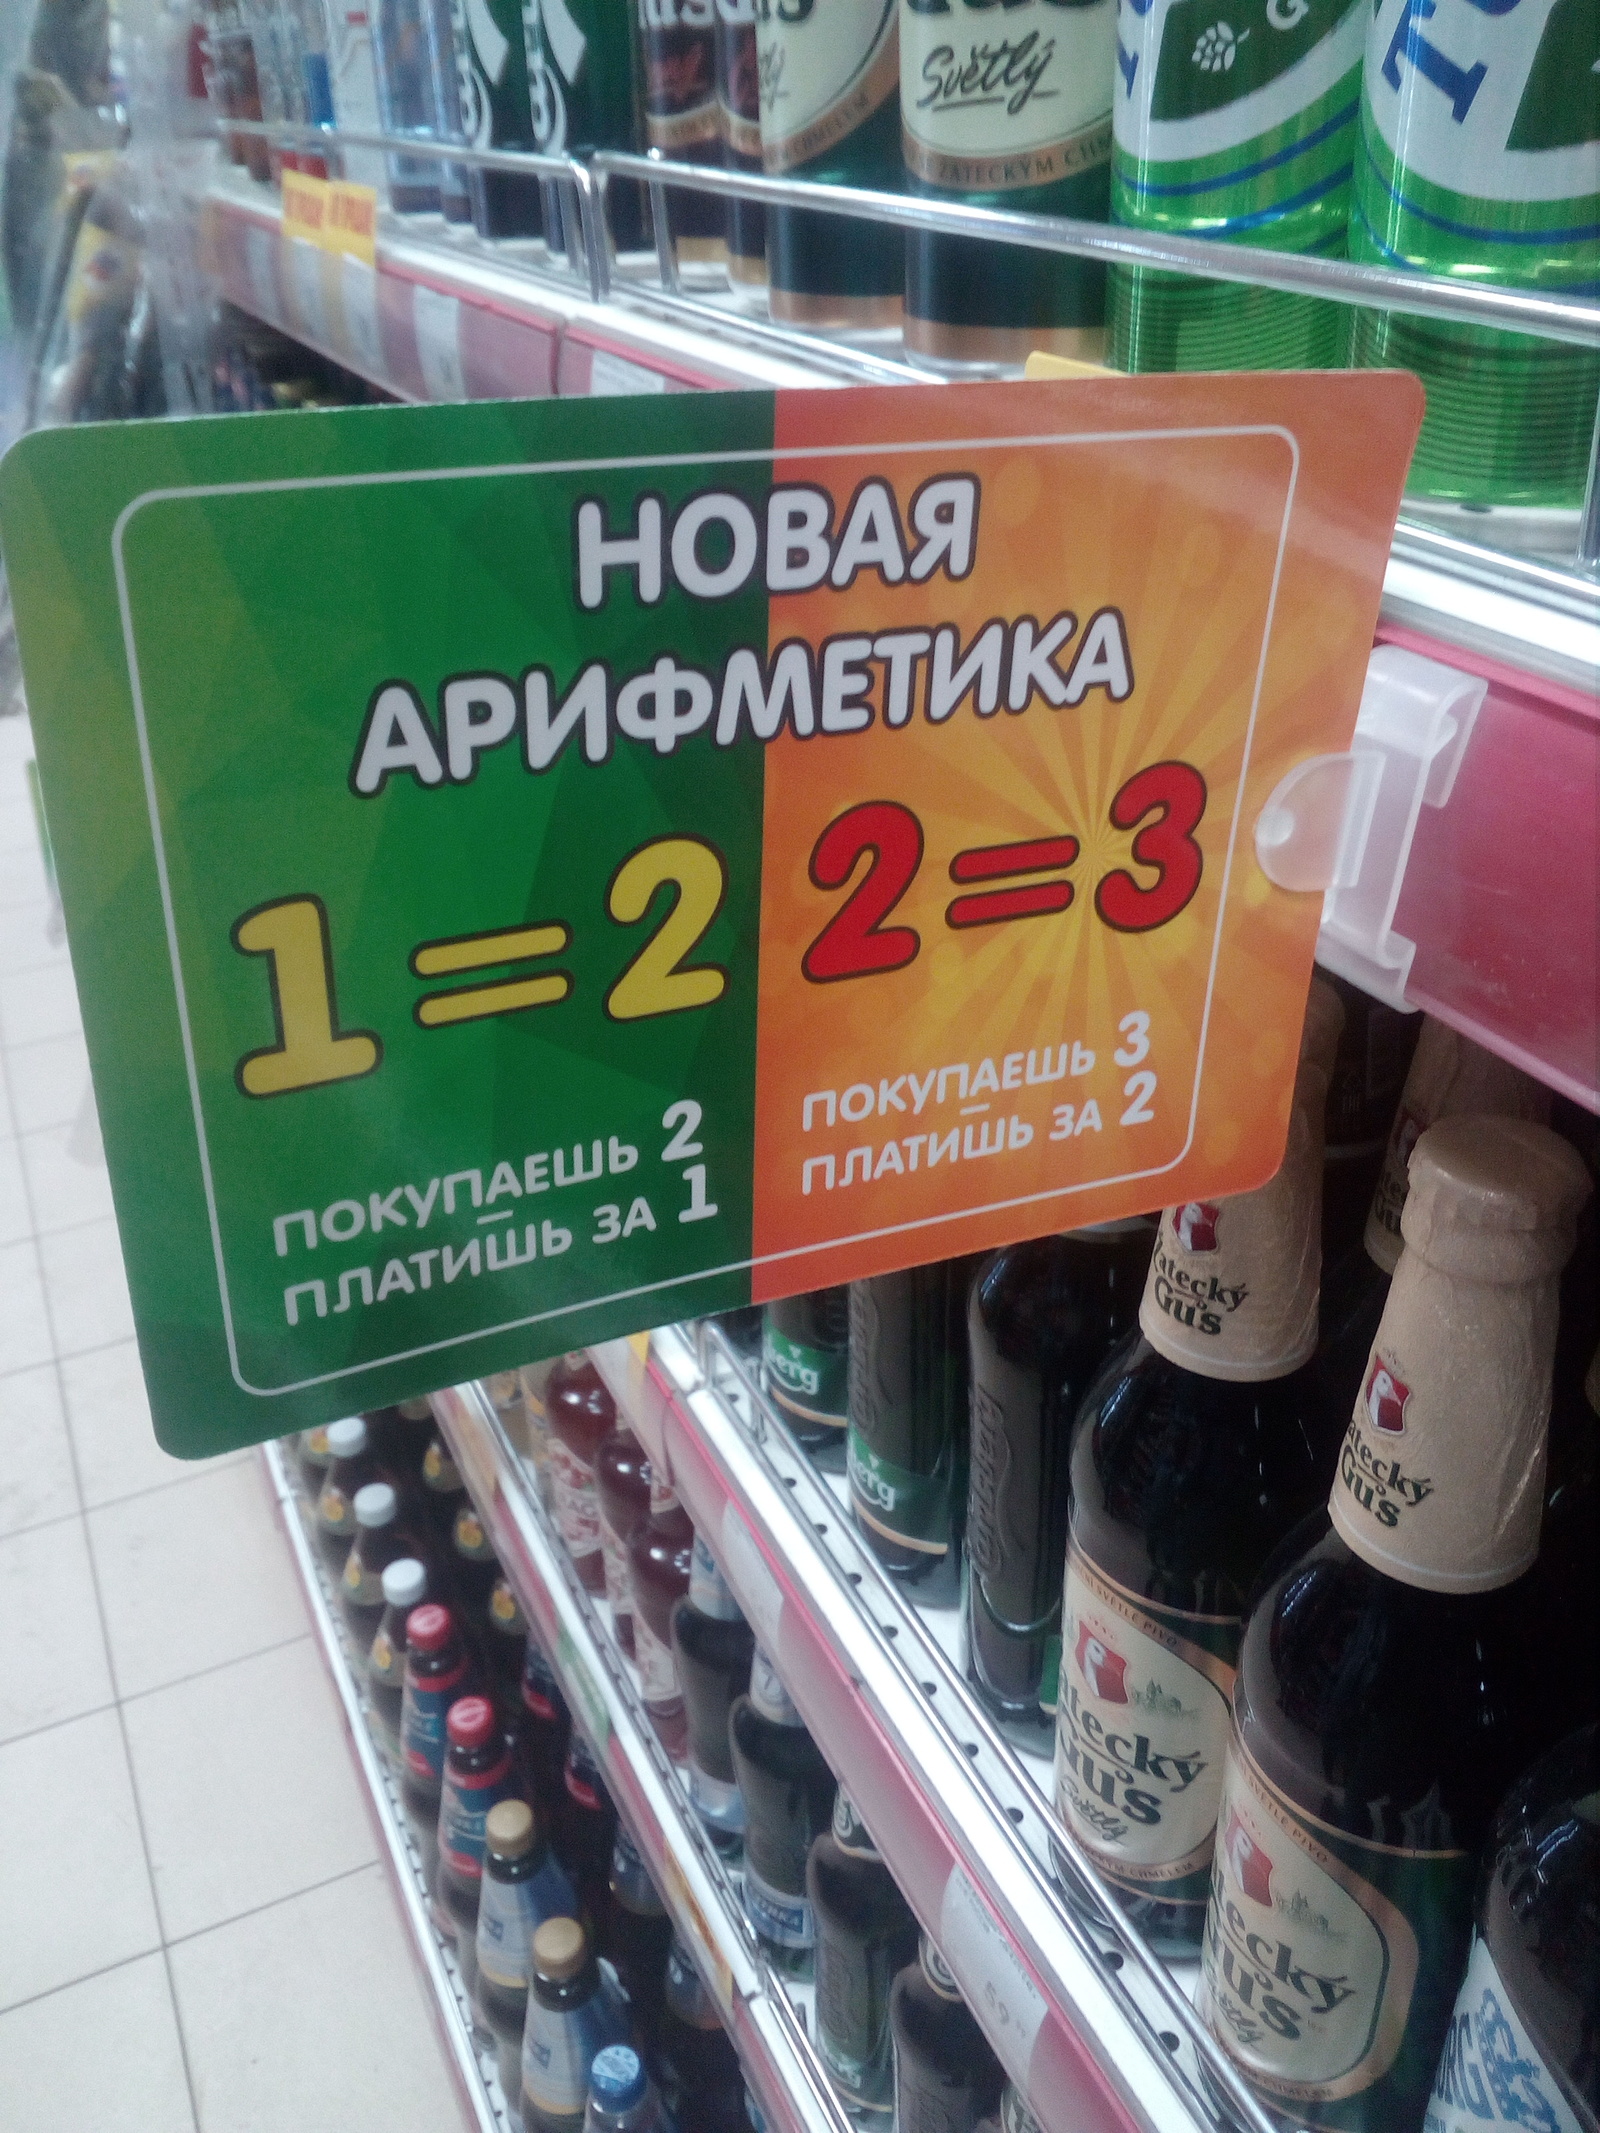 Promotion in Saratov stores. - My, Saratov, Stock, Entertaining arithmetic, Jews, Longpost